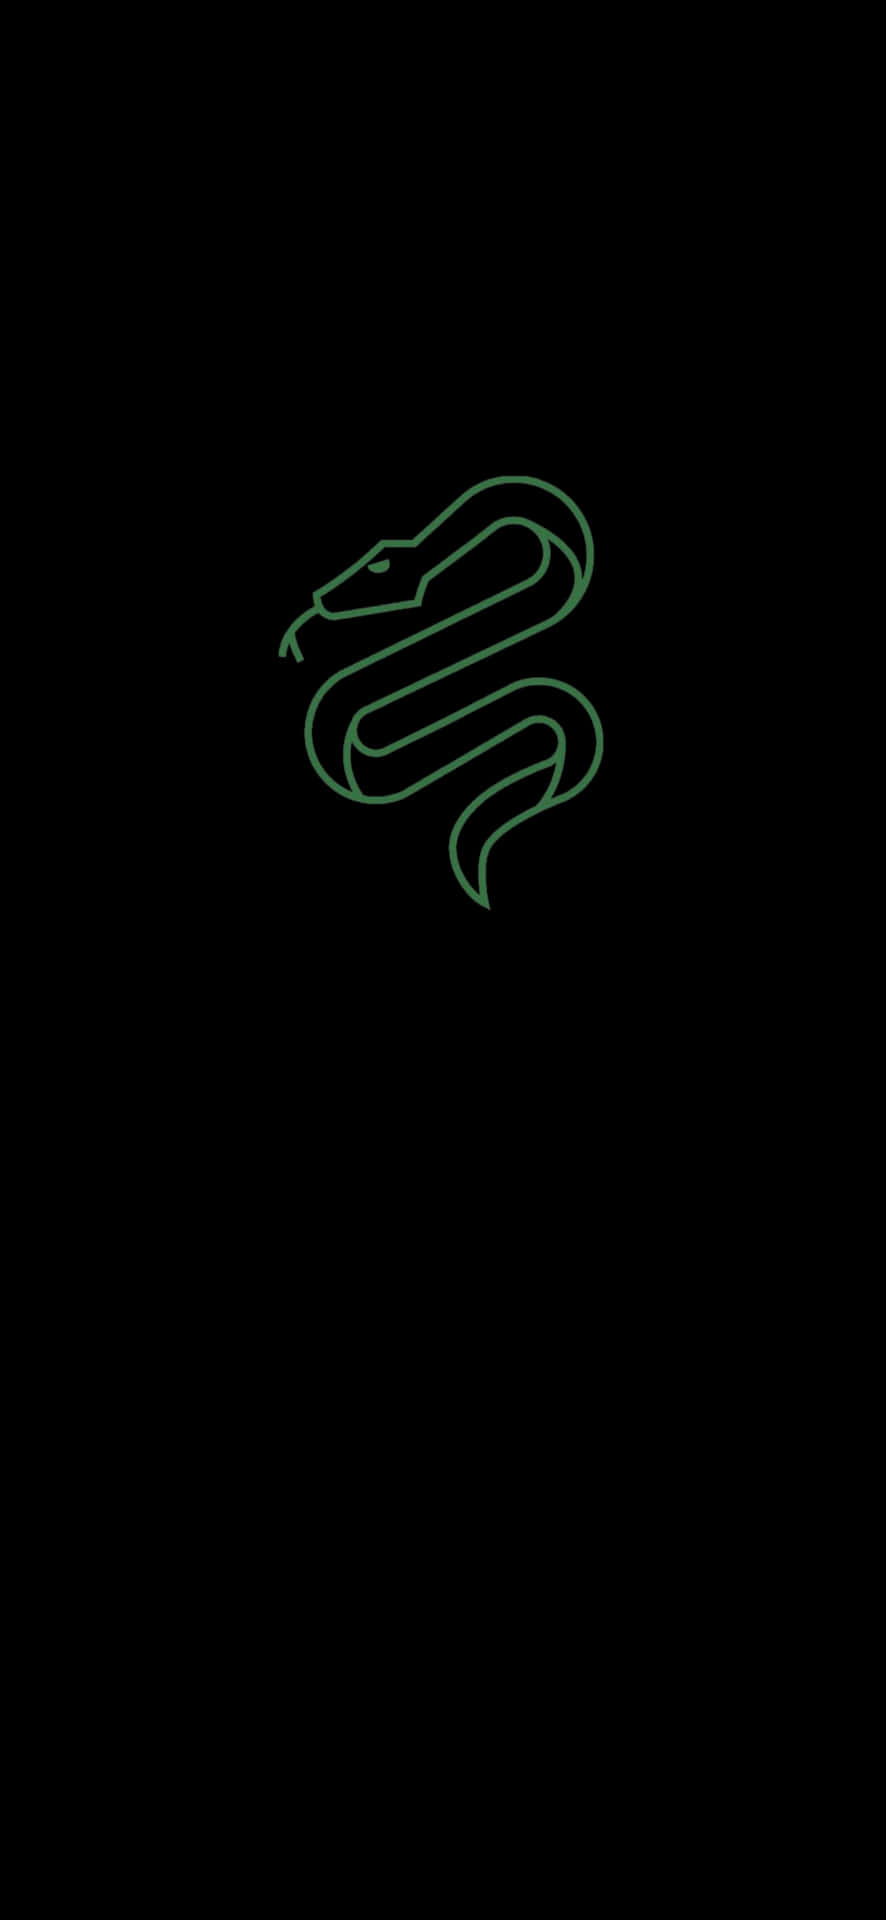 A Green Snake Logo On A Black Background Wallpaper